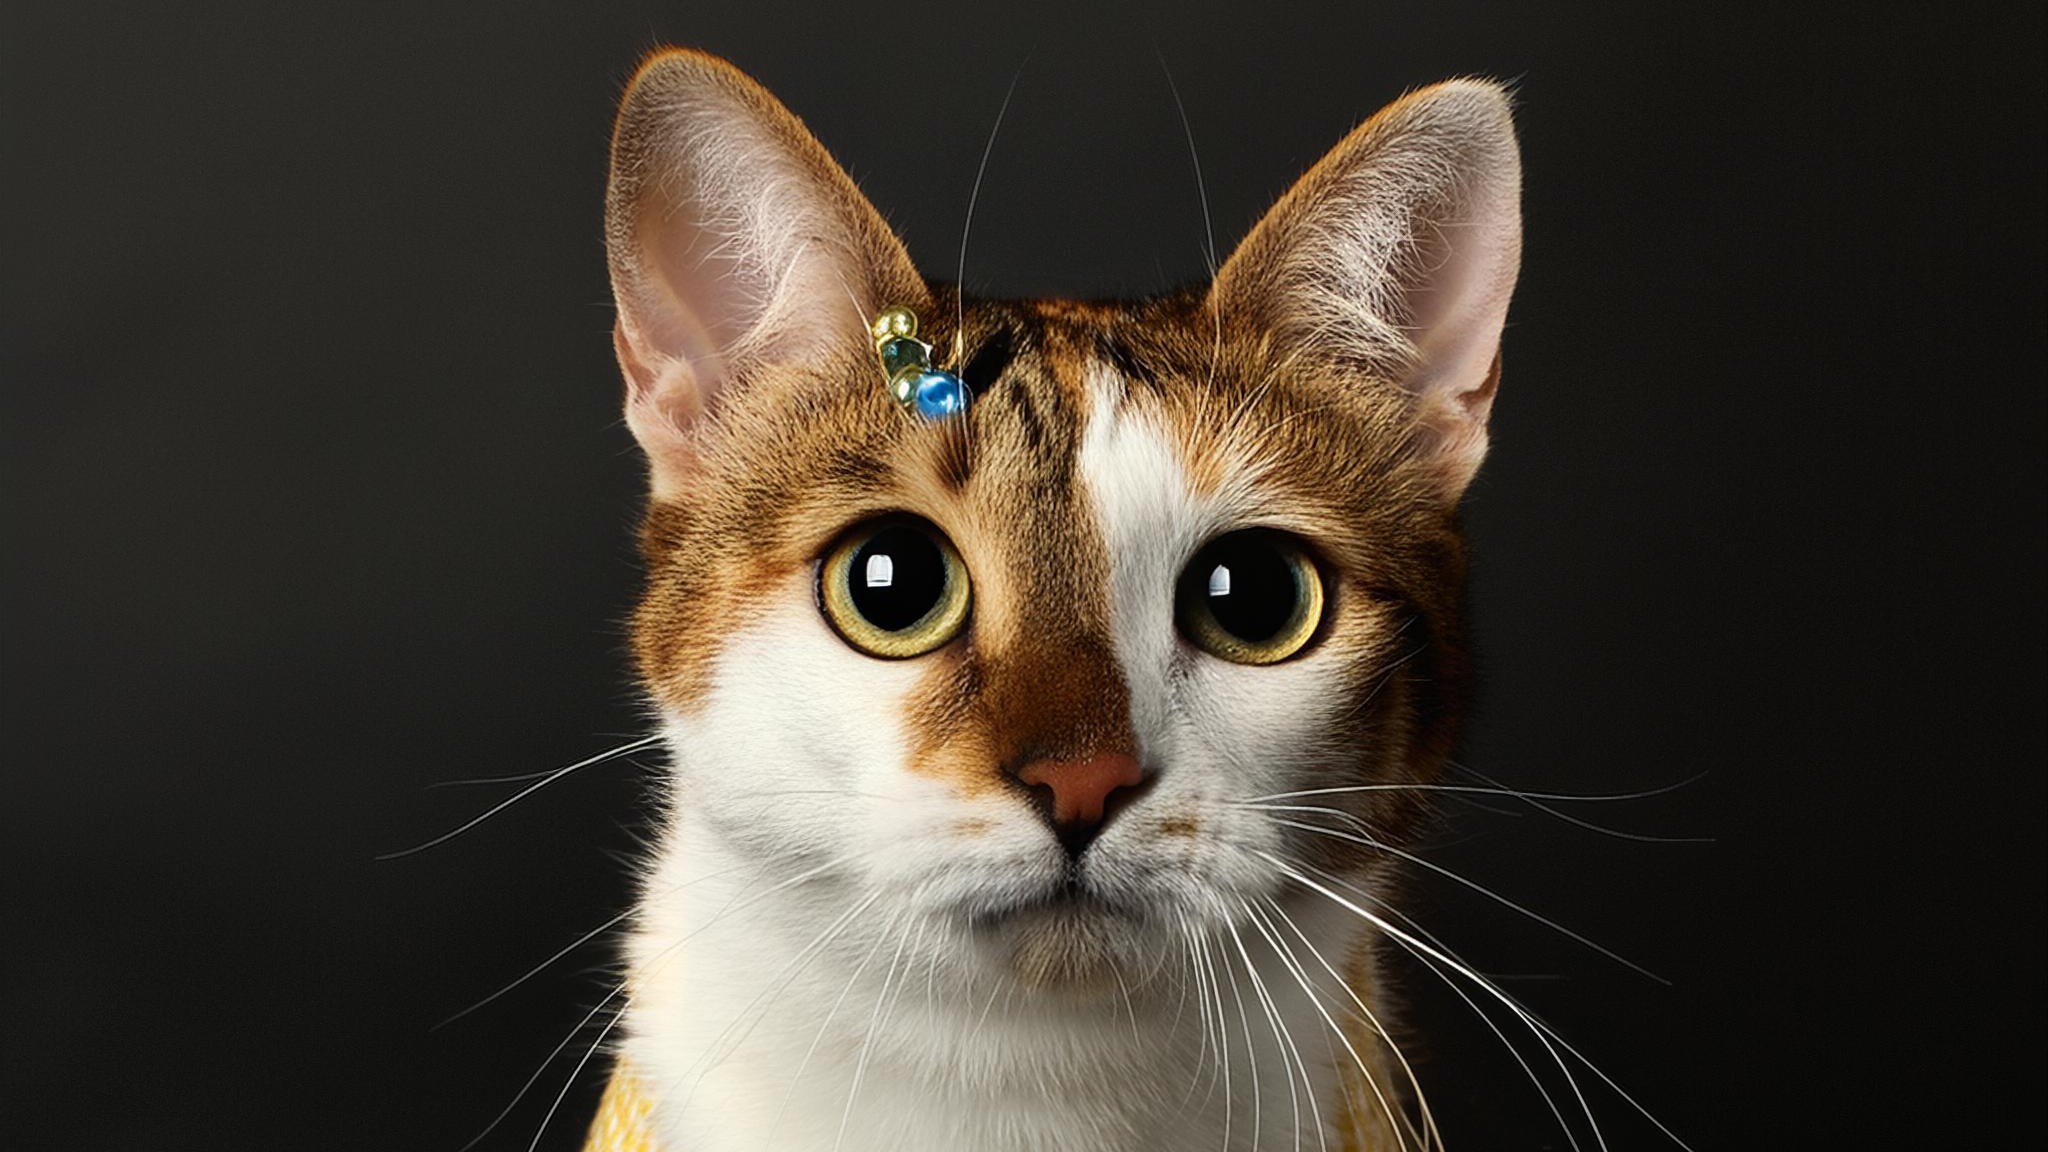 AI generated image of cat